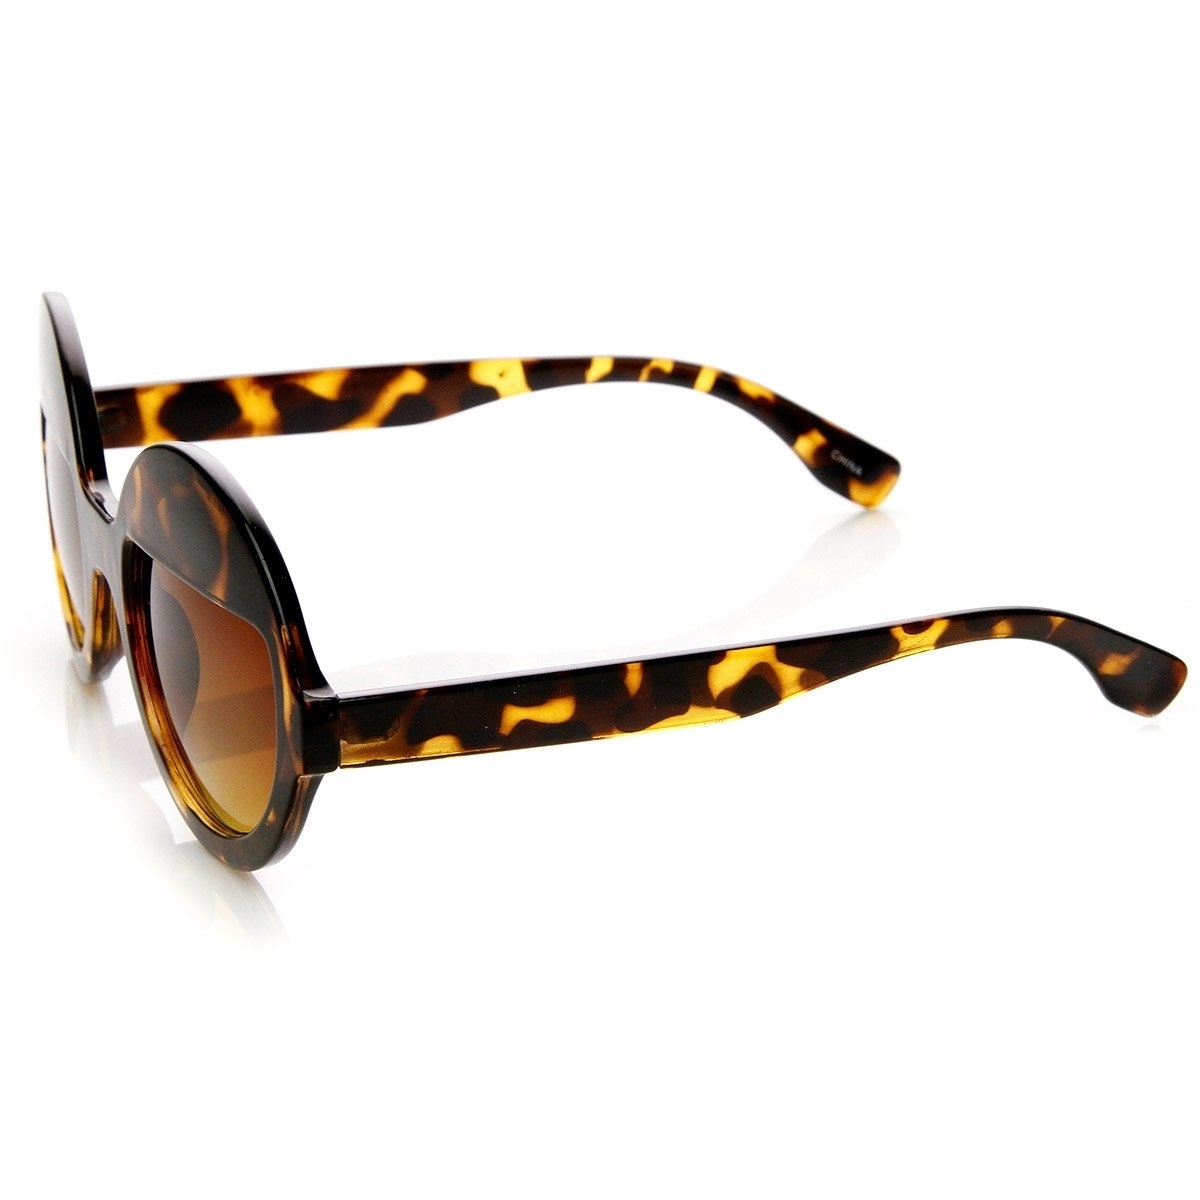 Womens High Fashion Eyelid Half Lens Round Sunglasses - Shiny-Black Lavender